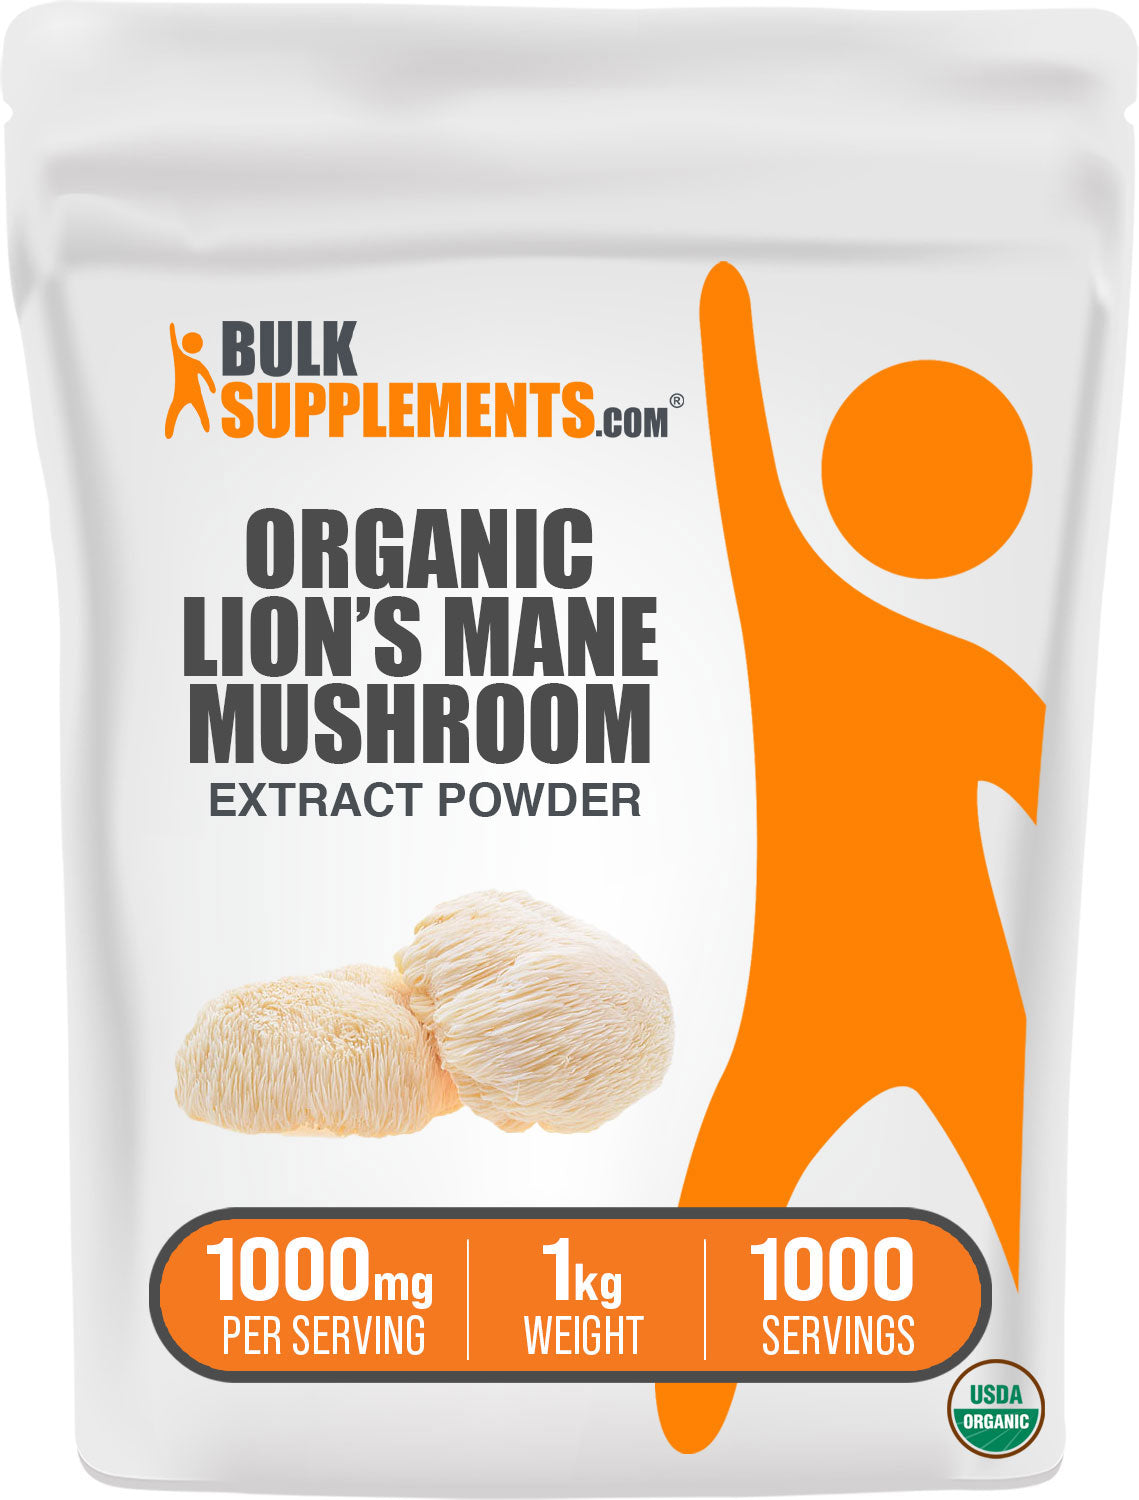 BulkSupplements.com Organic Lion's Mane Mushroom Extract Powder 1kg bag